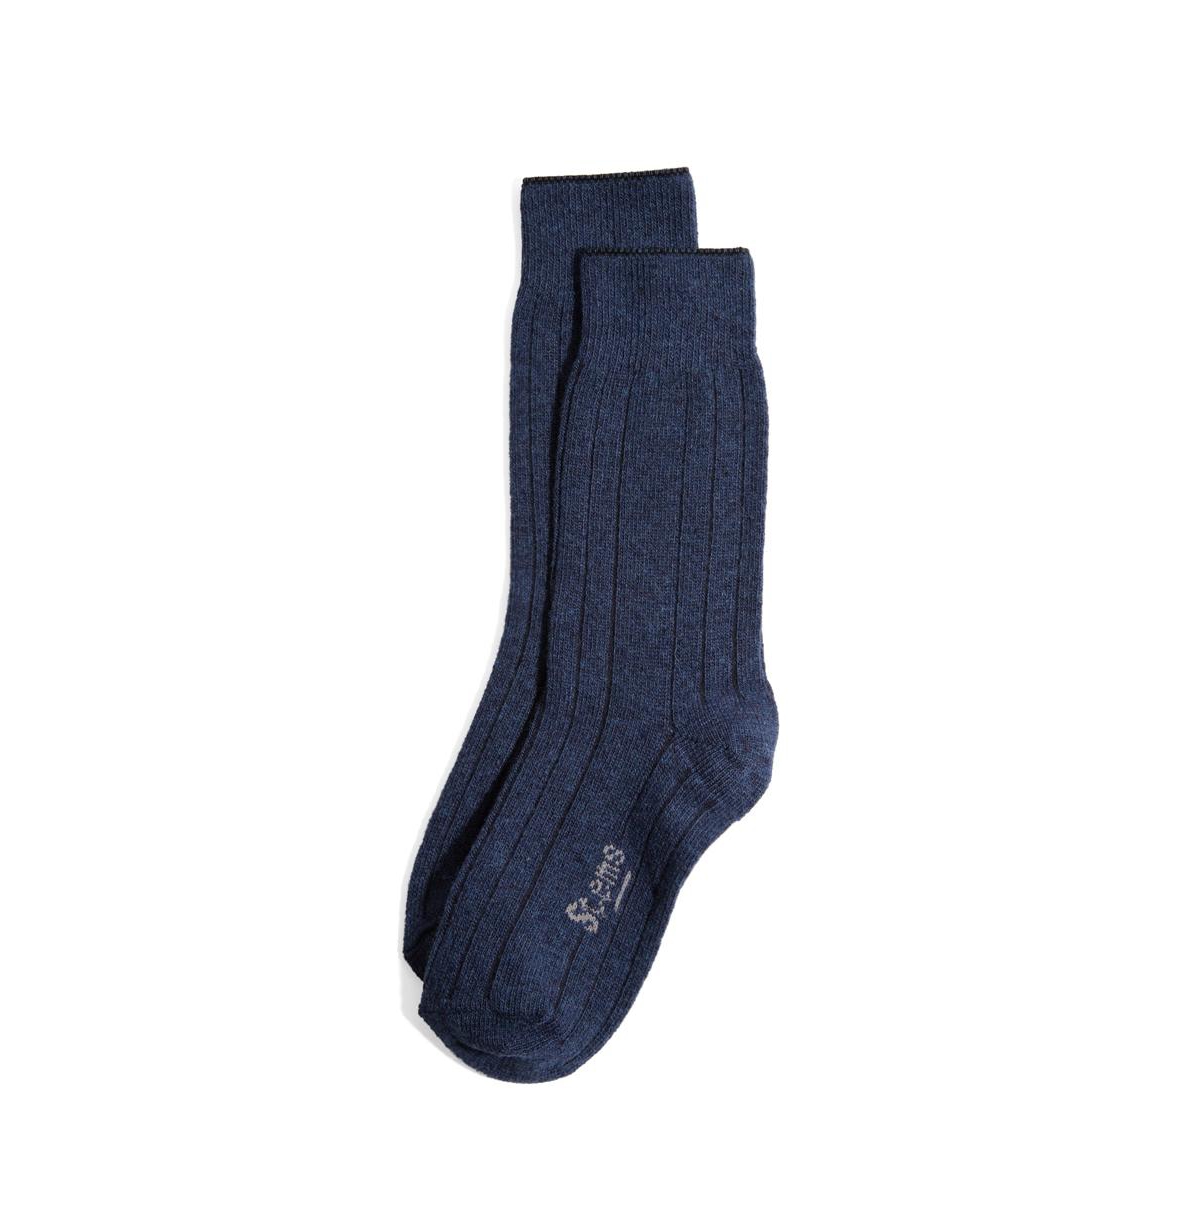 Stems Lola Cotton & Cashmere Comfort Crew Socks